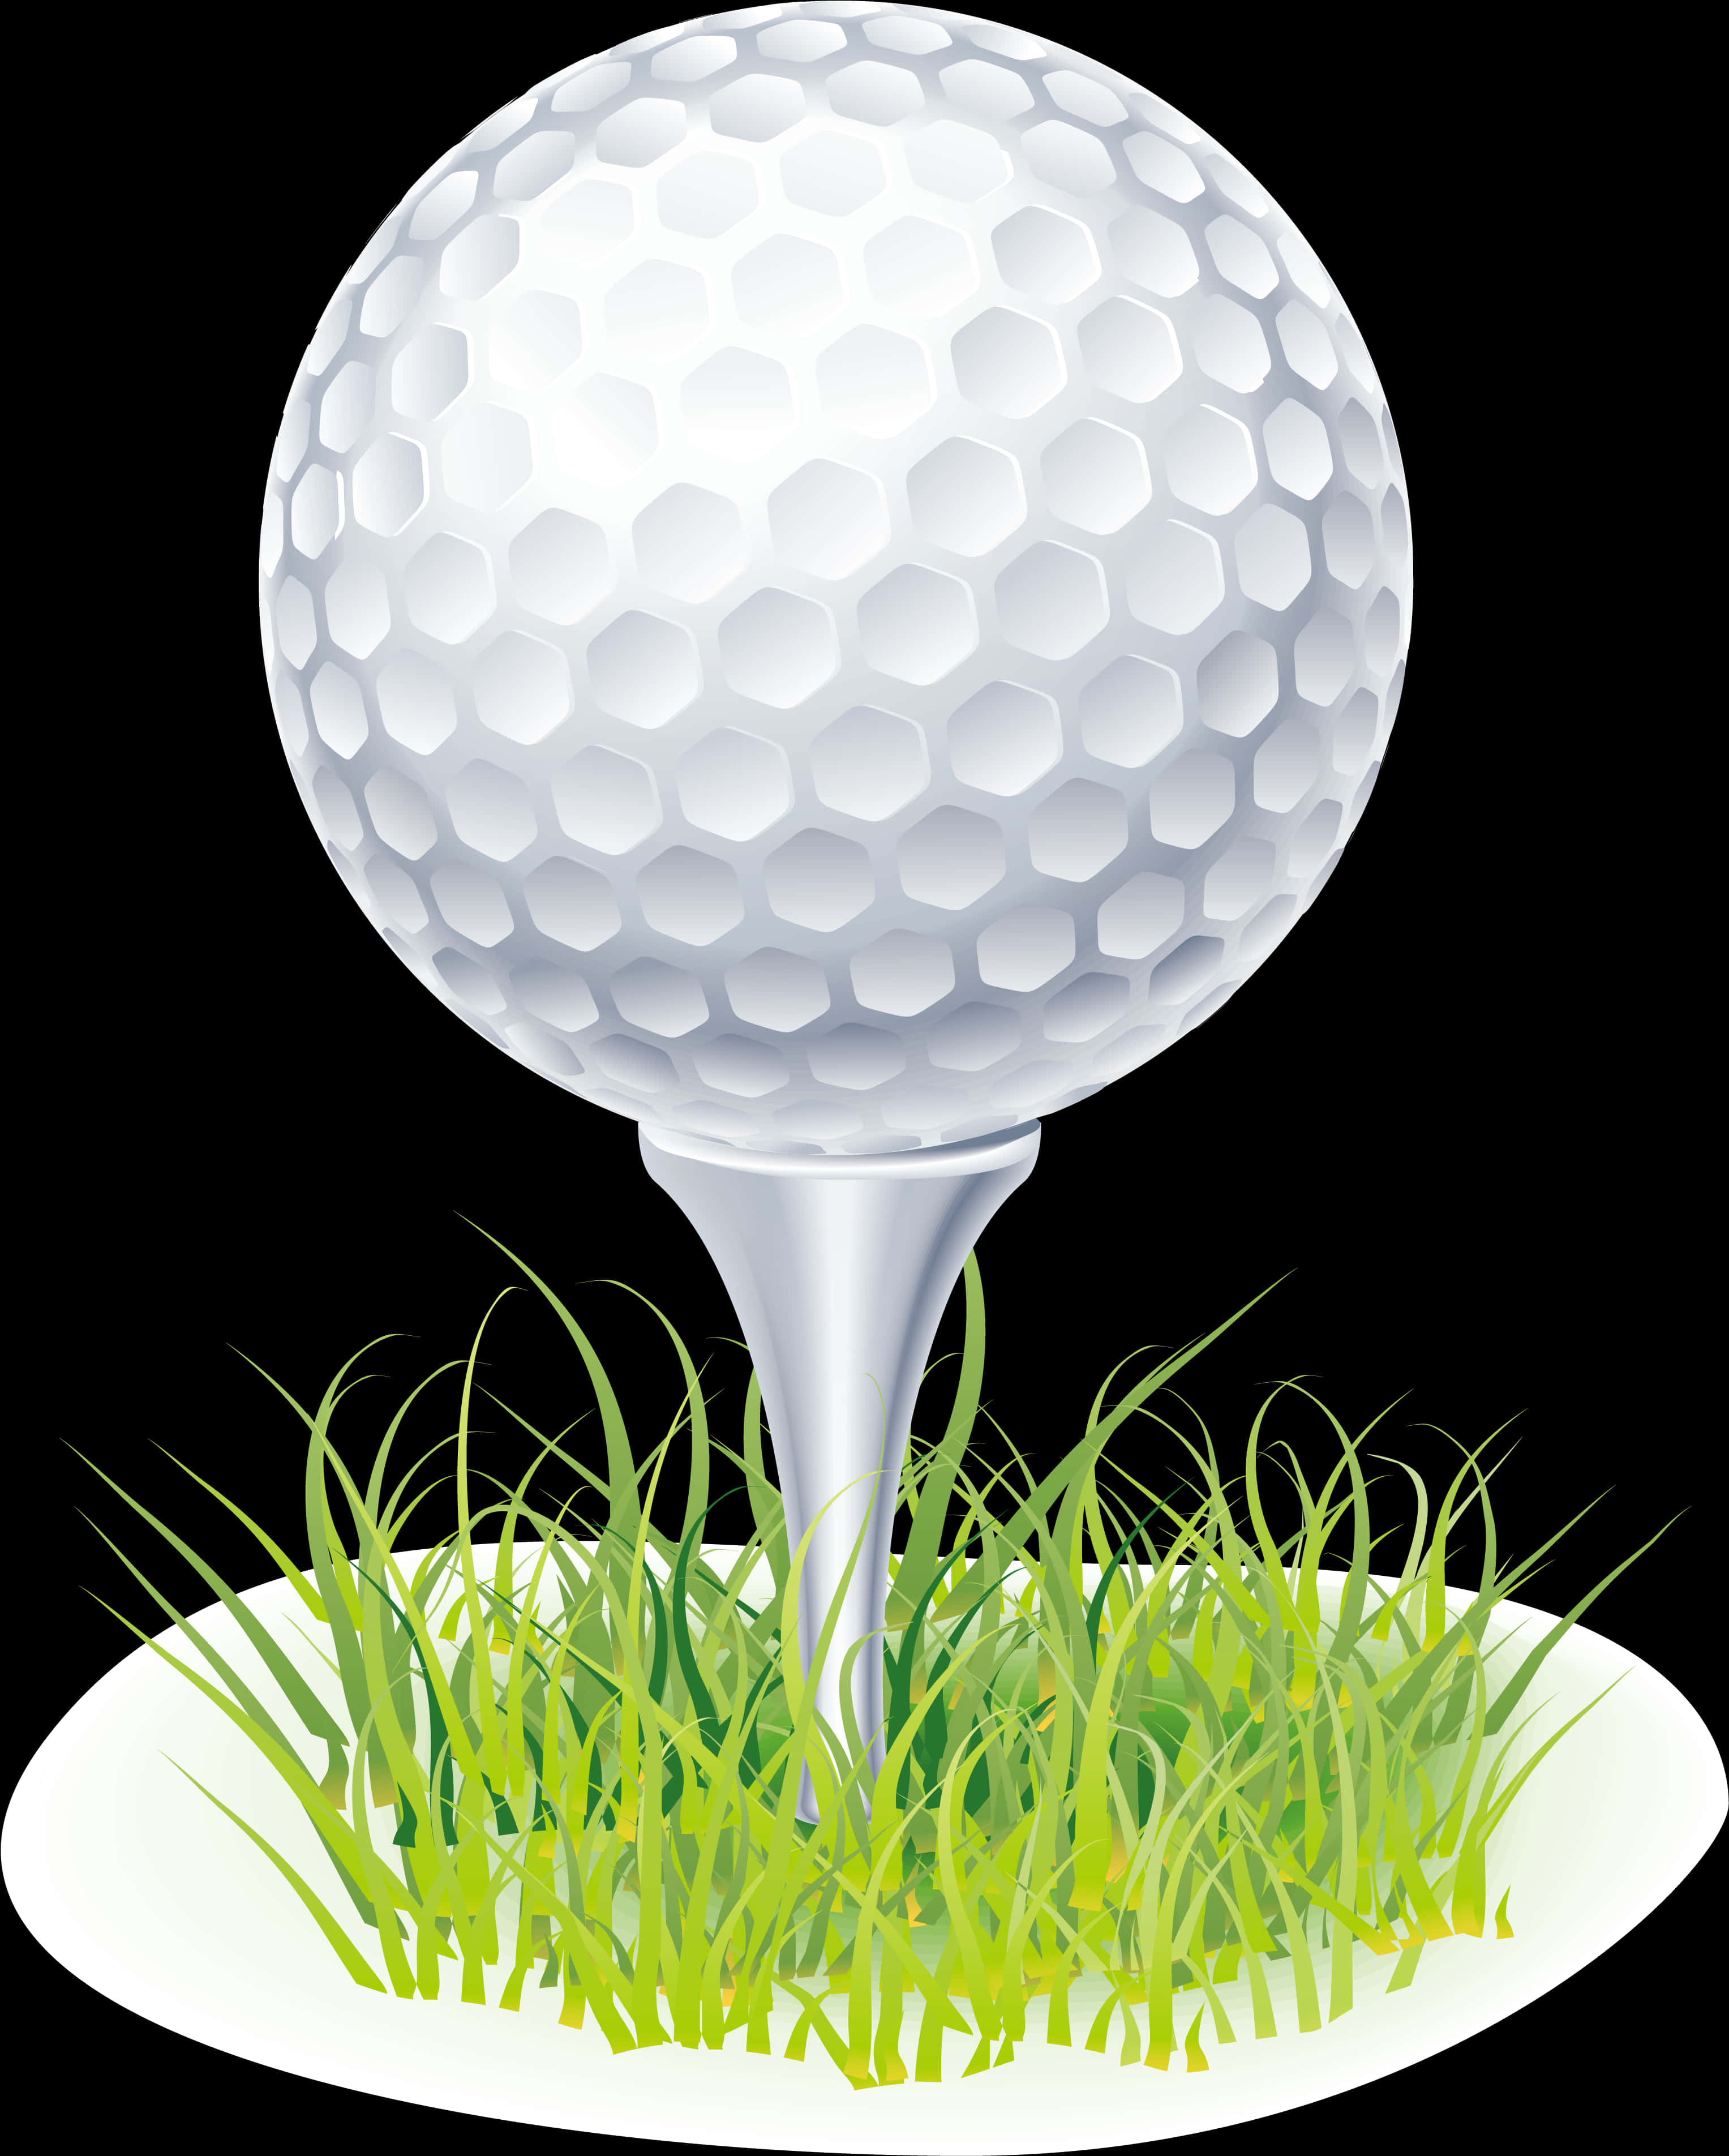 A Golf Ball On A Tee In Grass